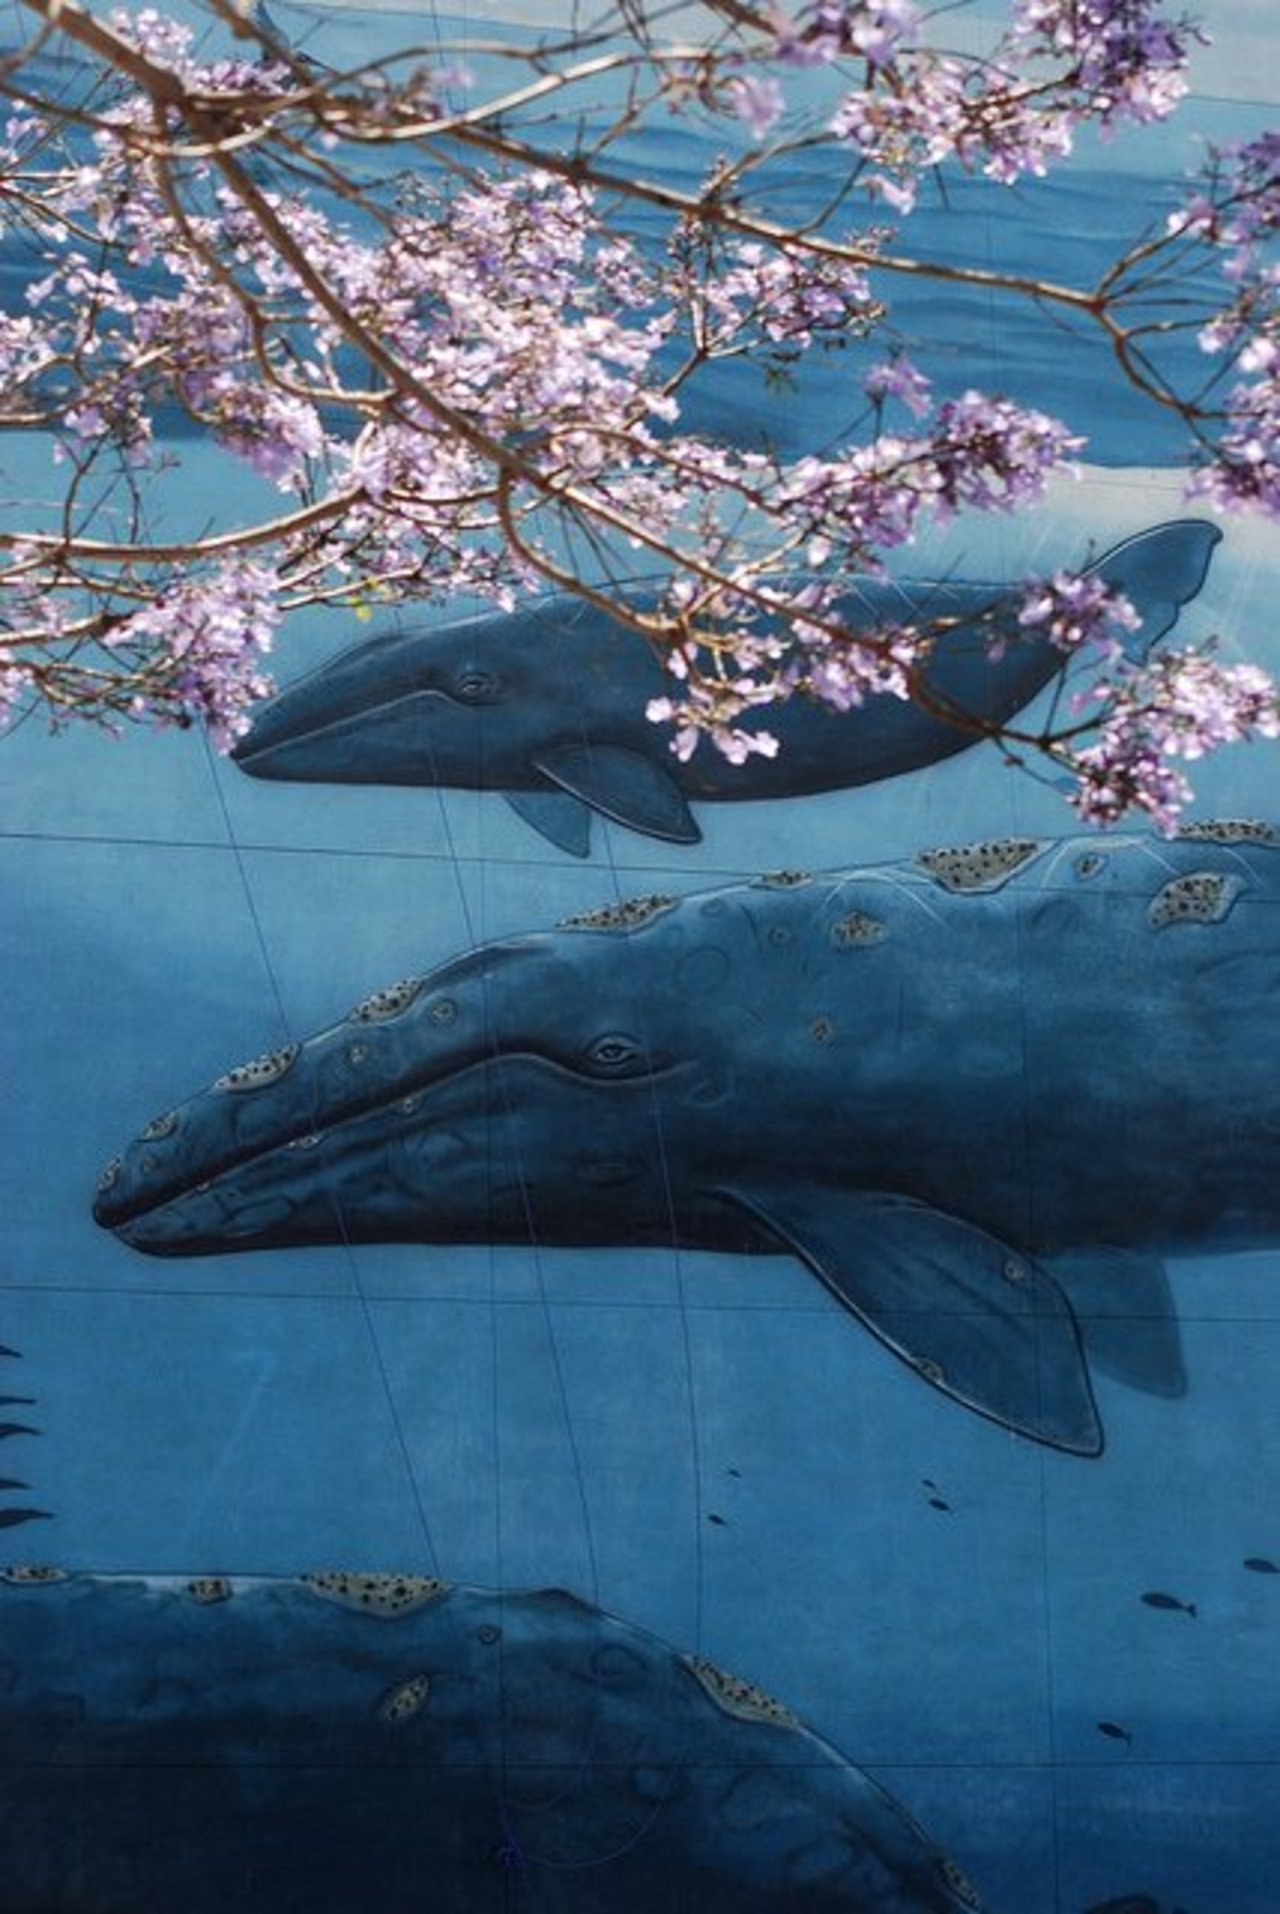 Whales in Spring  •  #streetart #graffiti #art #sakura #funky #dope . : https://t.co/N1FGVfhDya